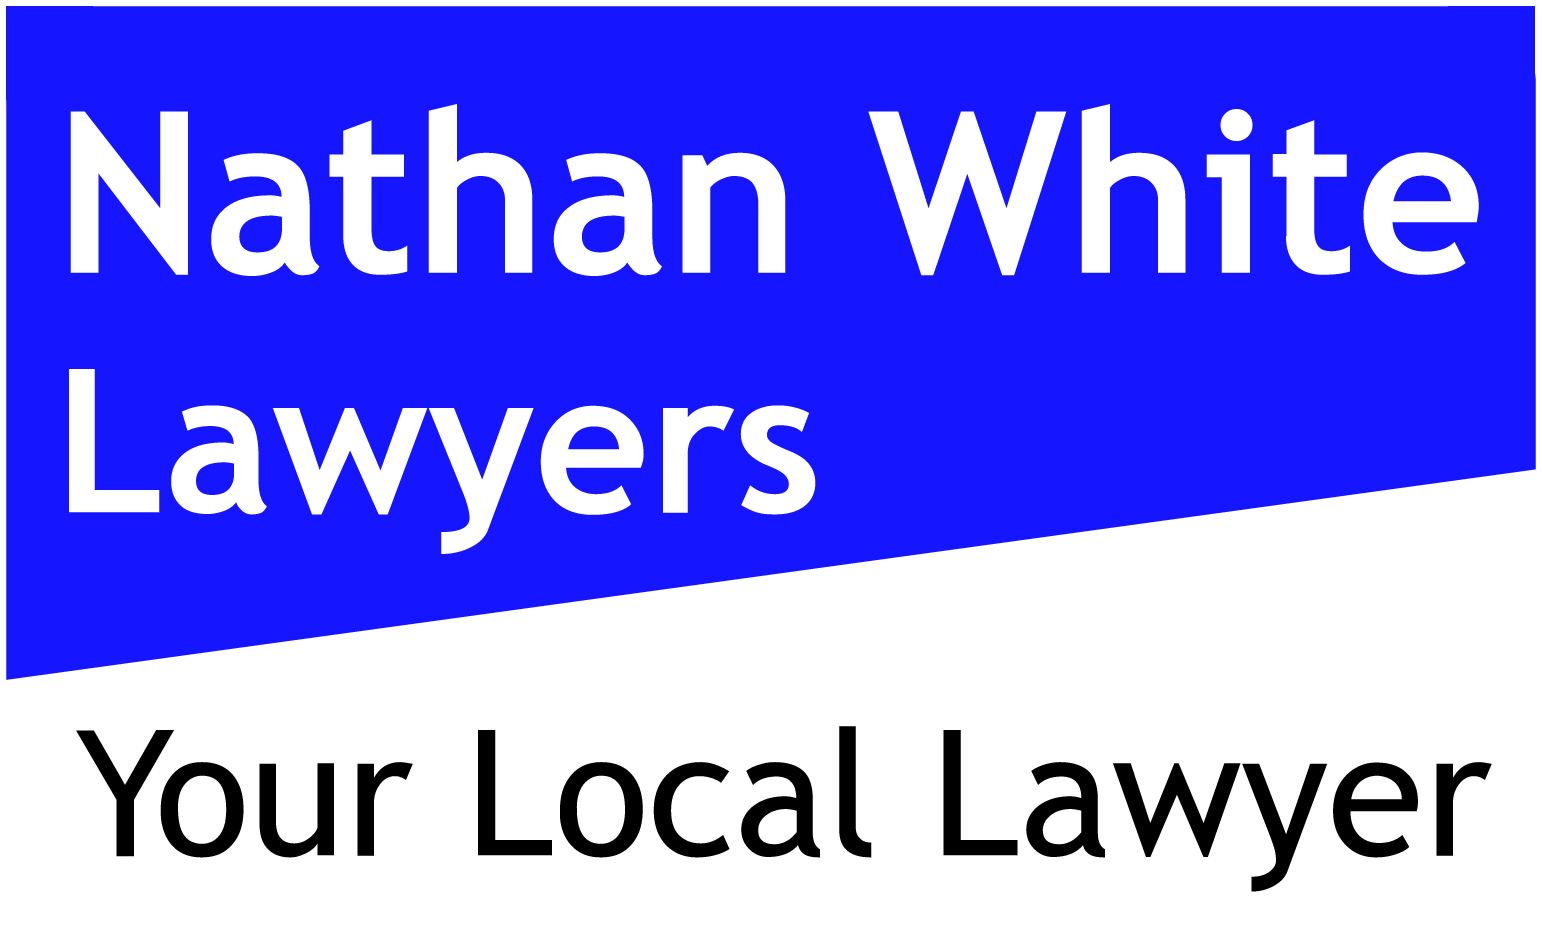 Nathan White Lawyers logo